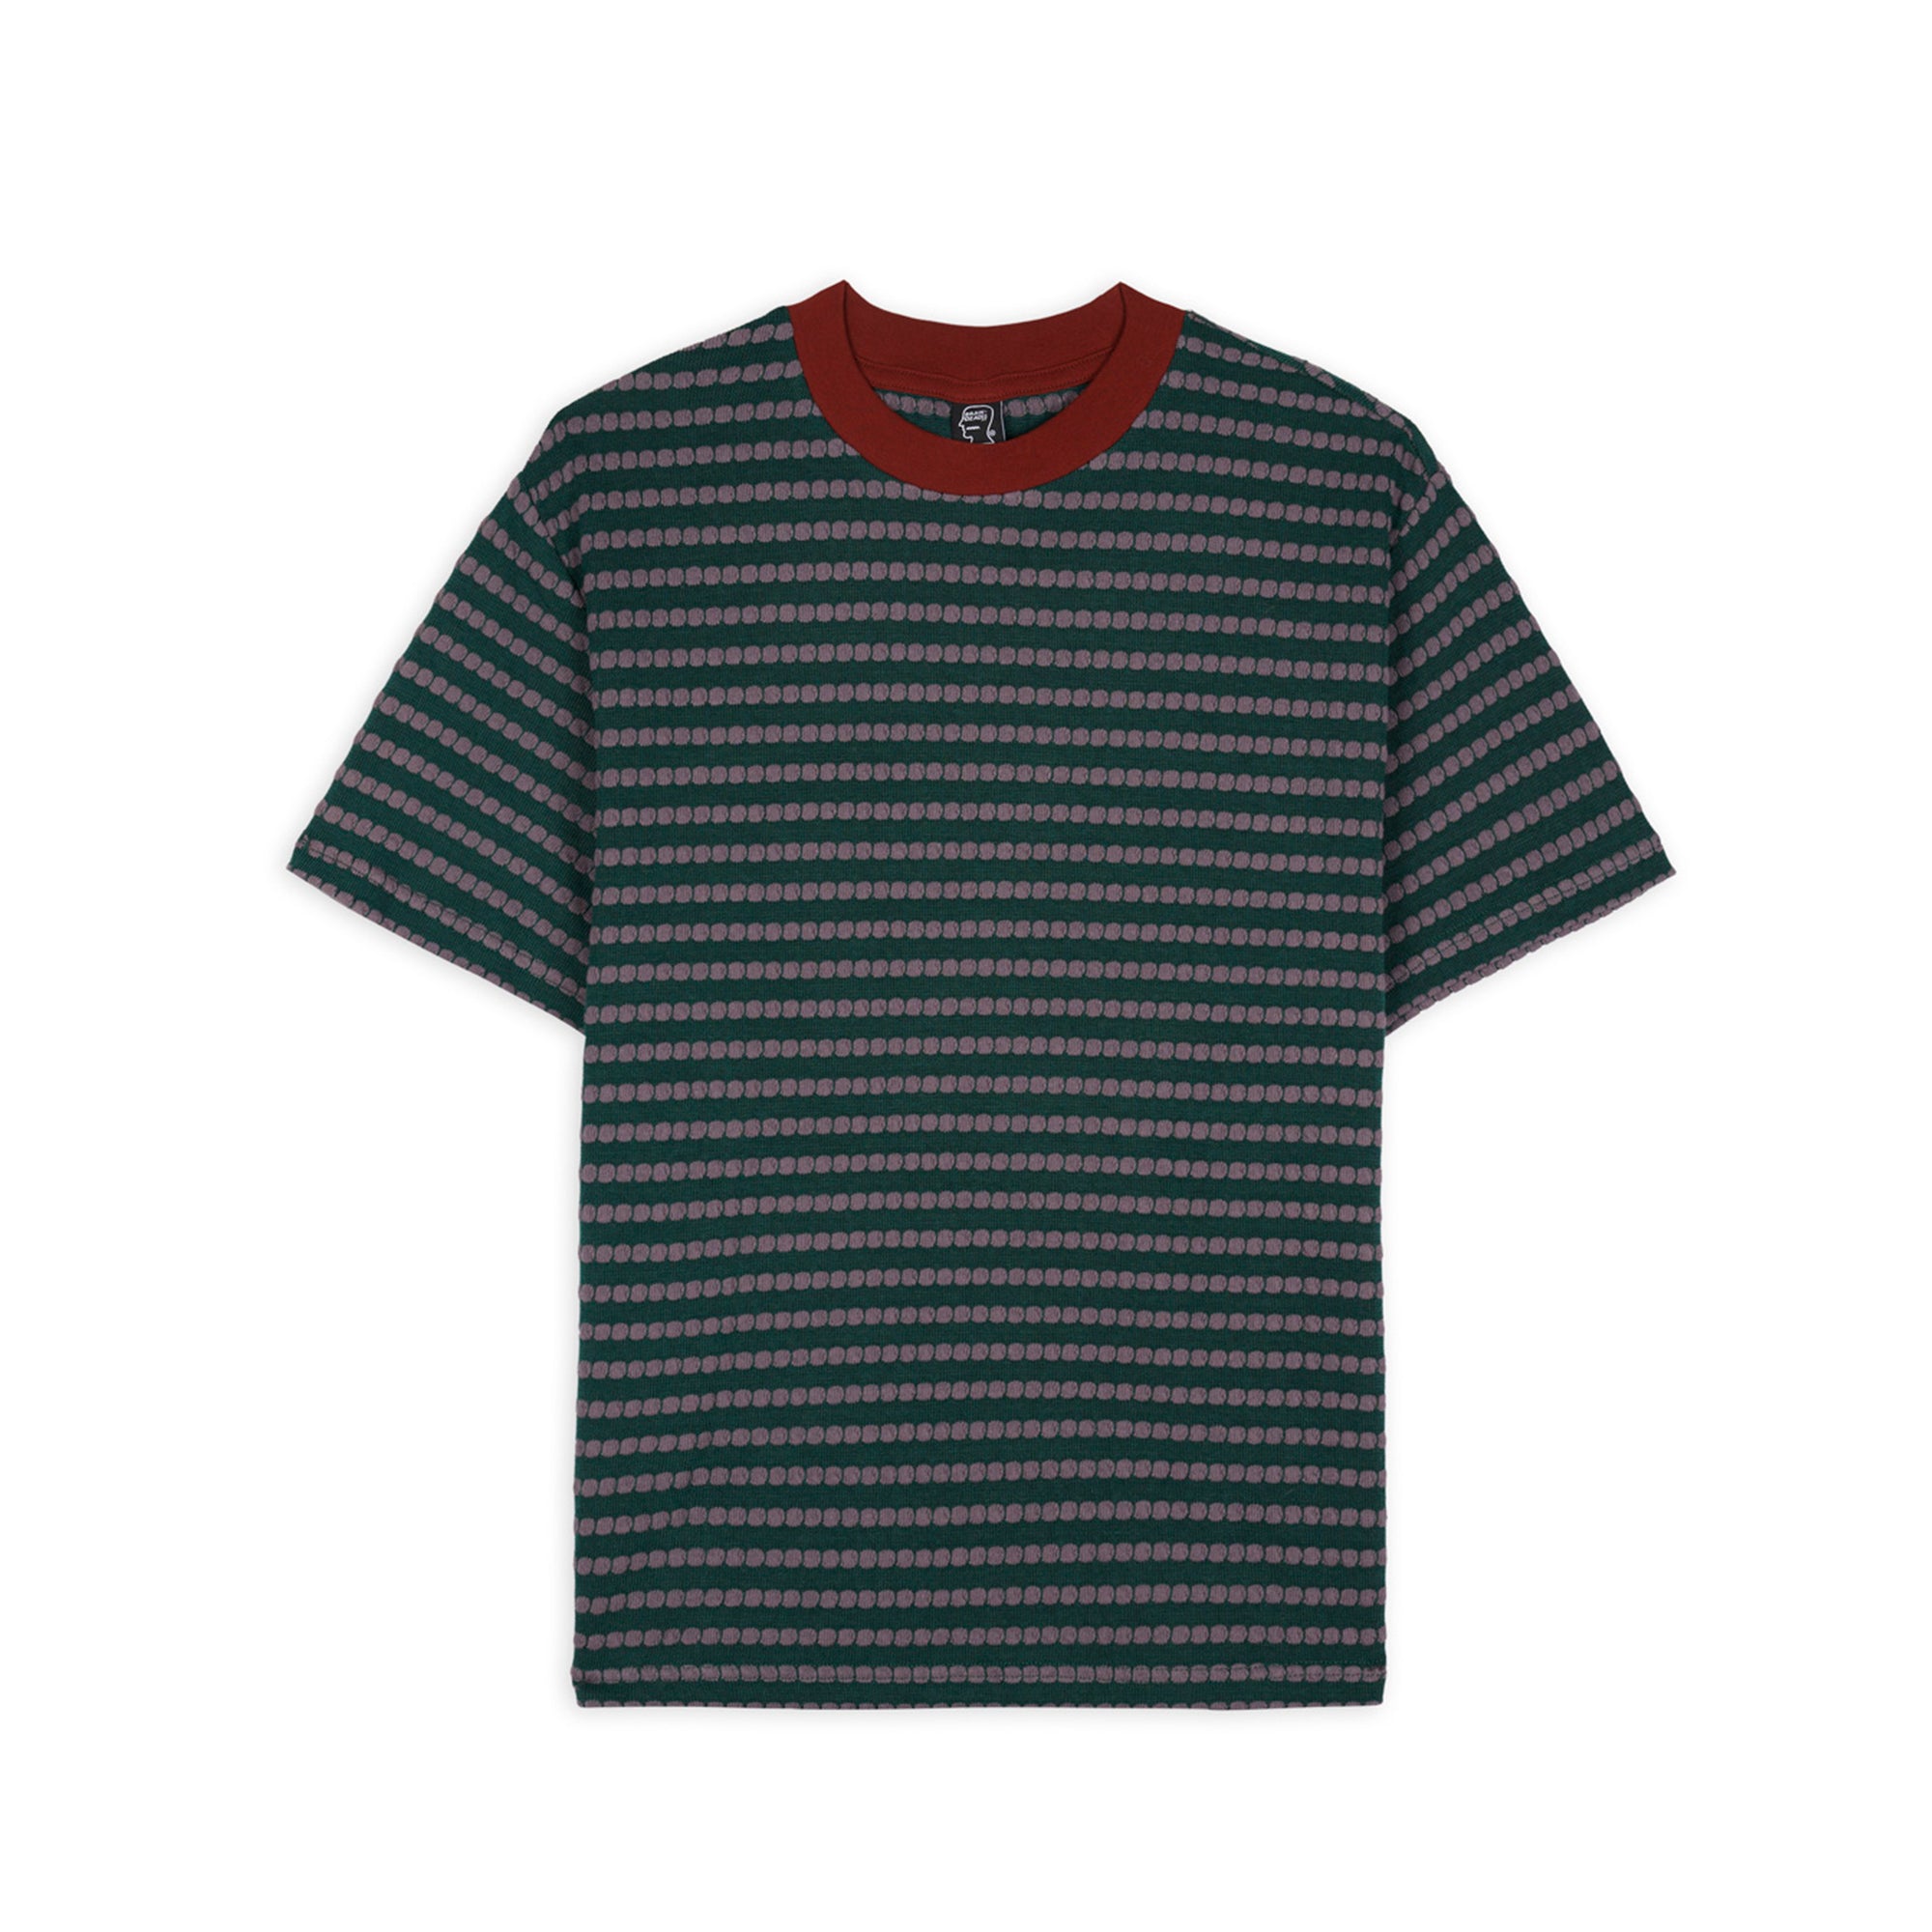 Brain Dead - Men’s Raised Dot Striped T-Shirt - (Forest Green) view 1